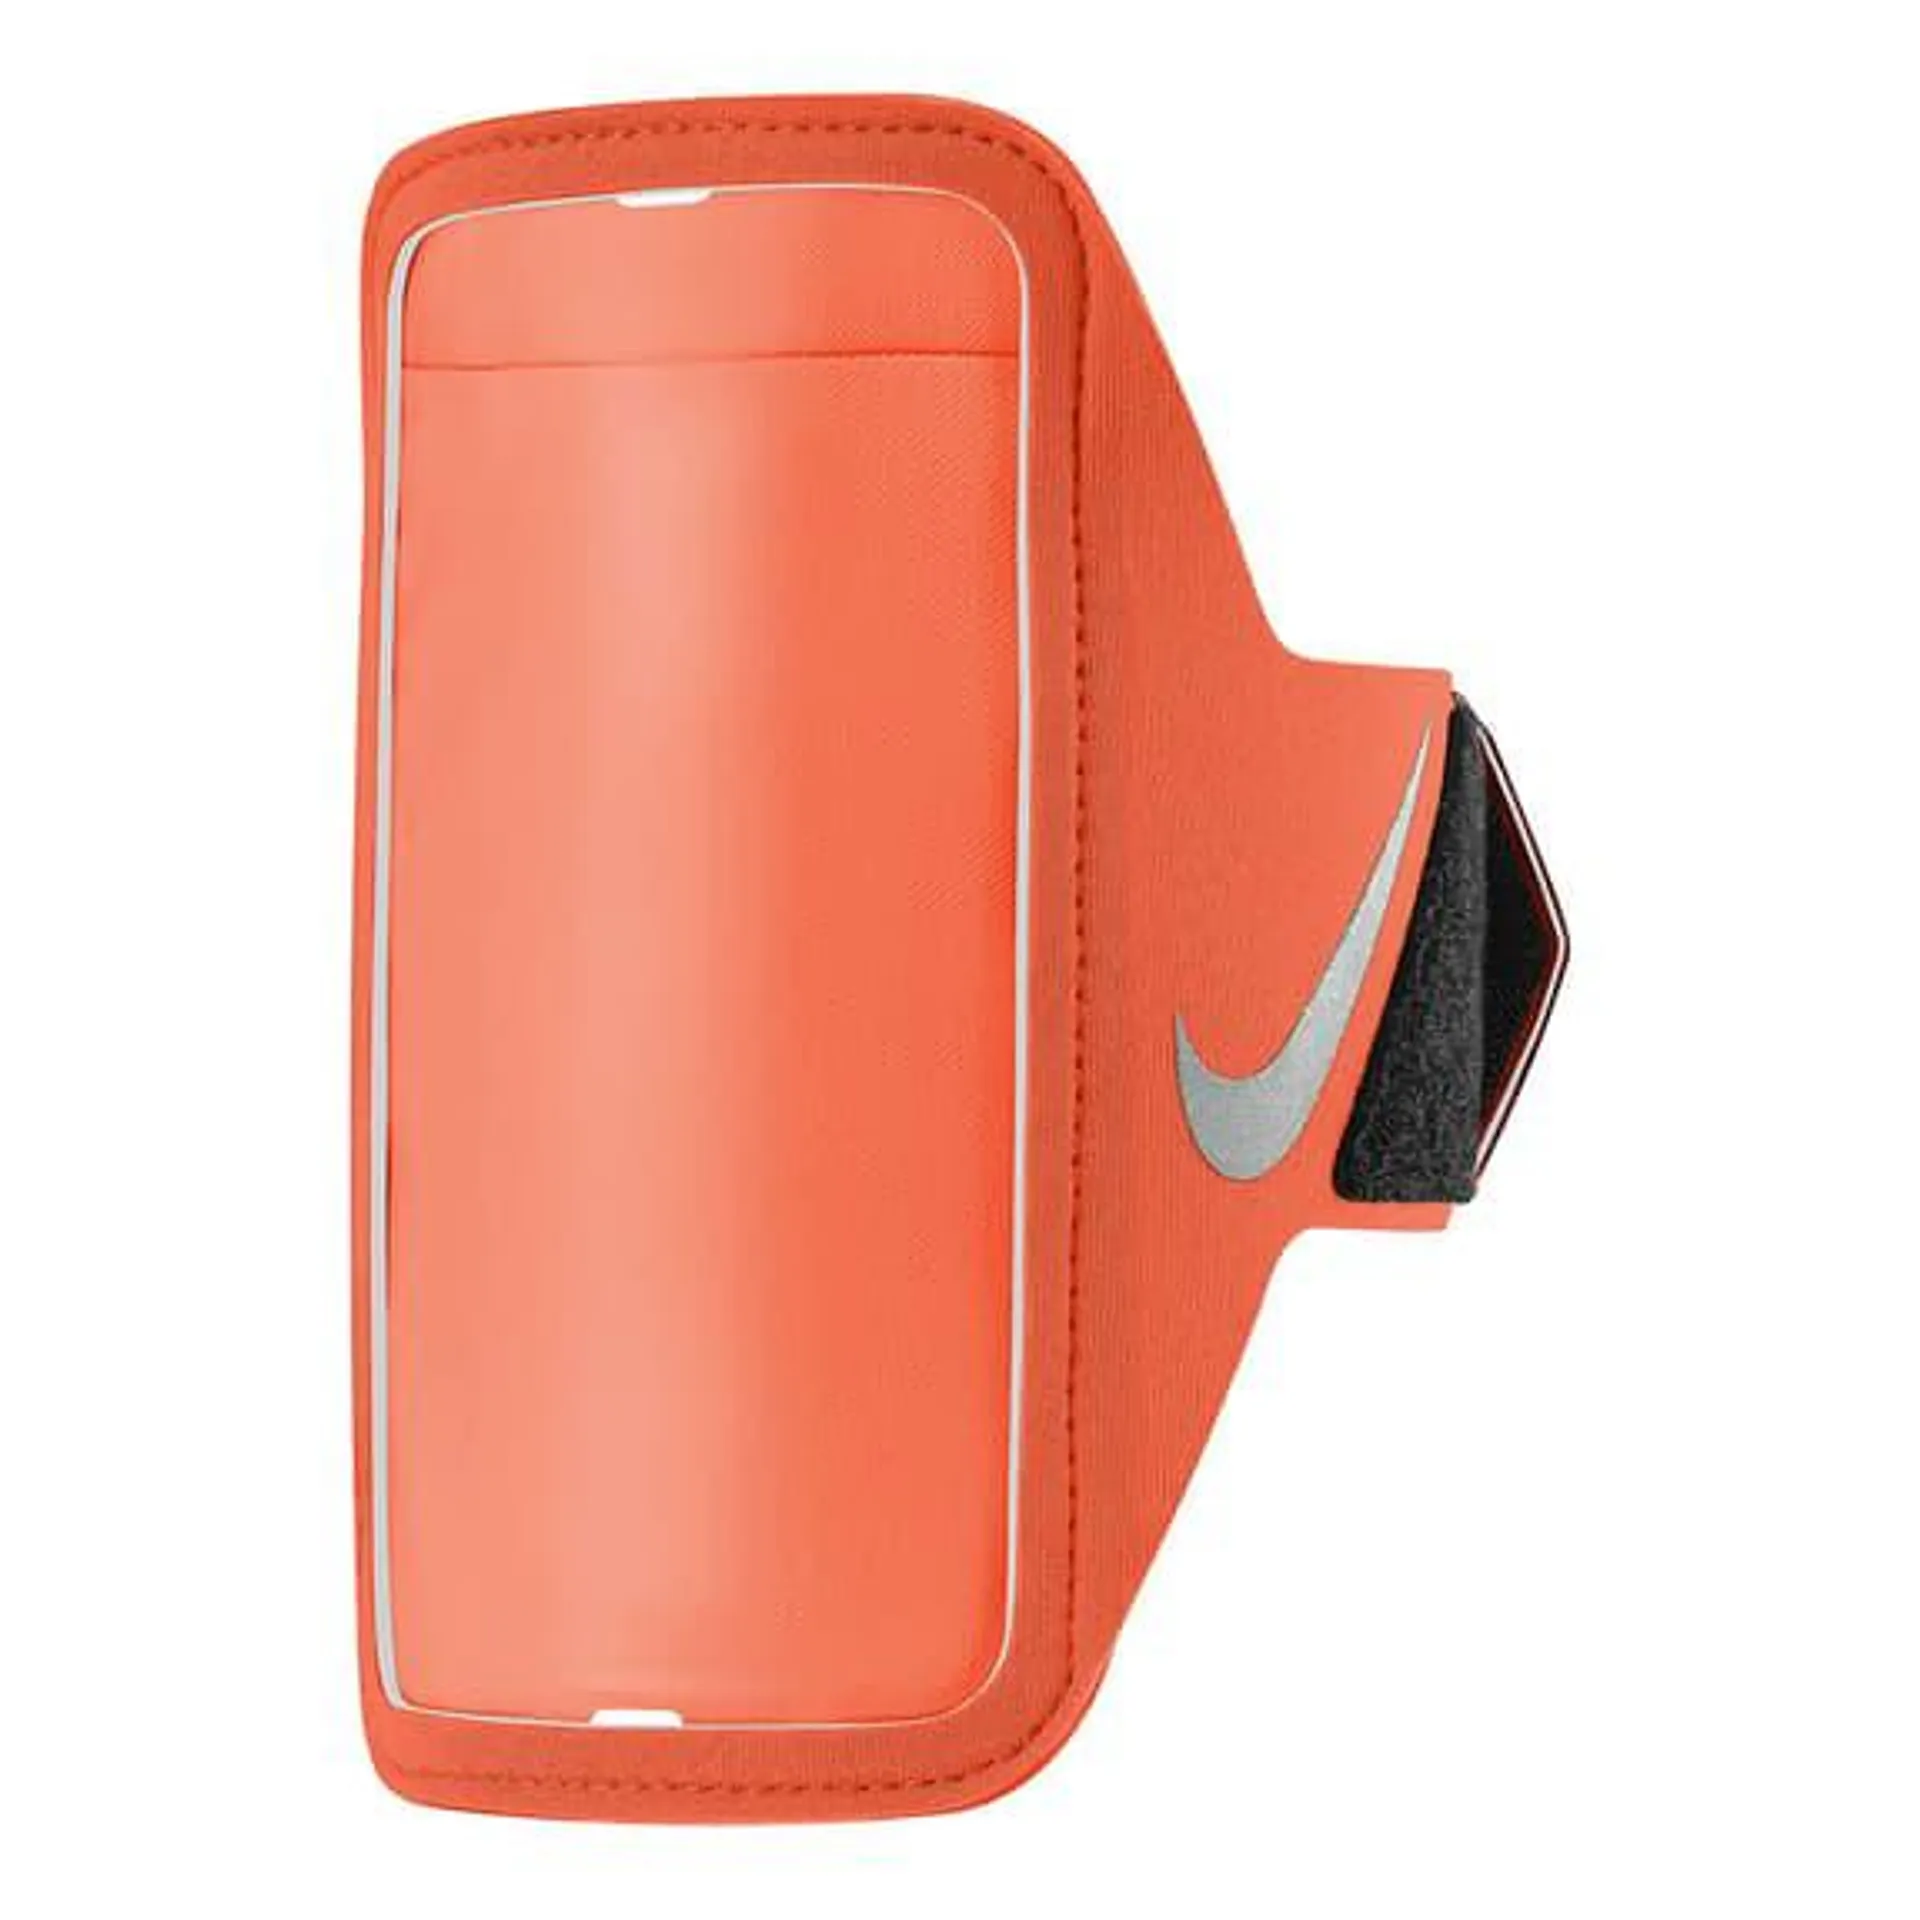 Brassard Nike Lean Arm Band orange